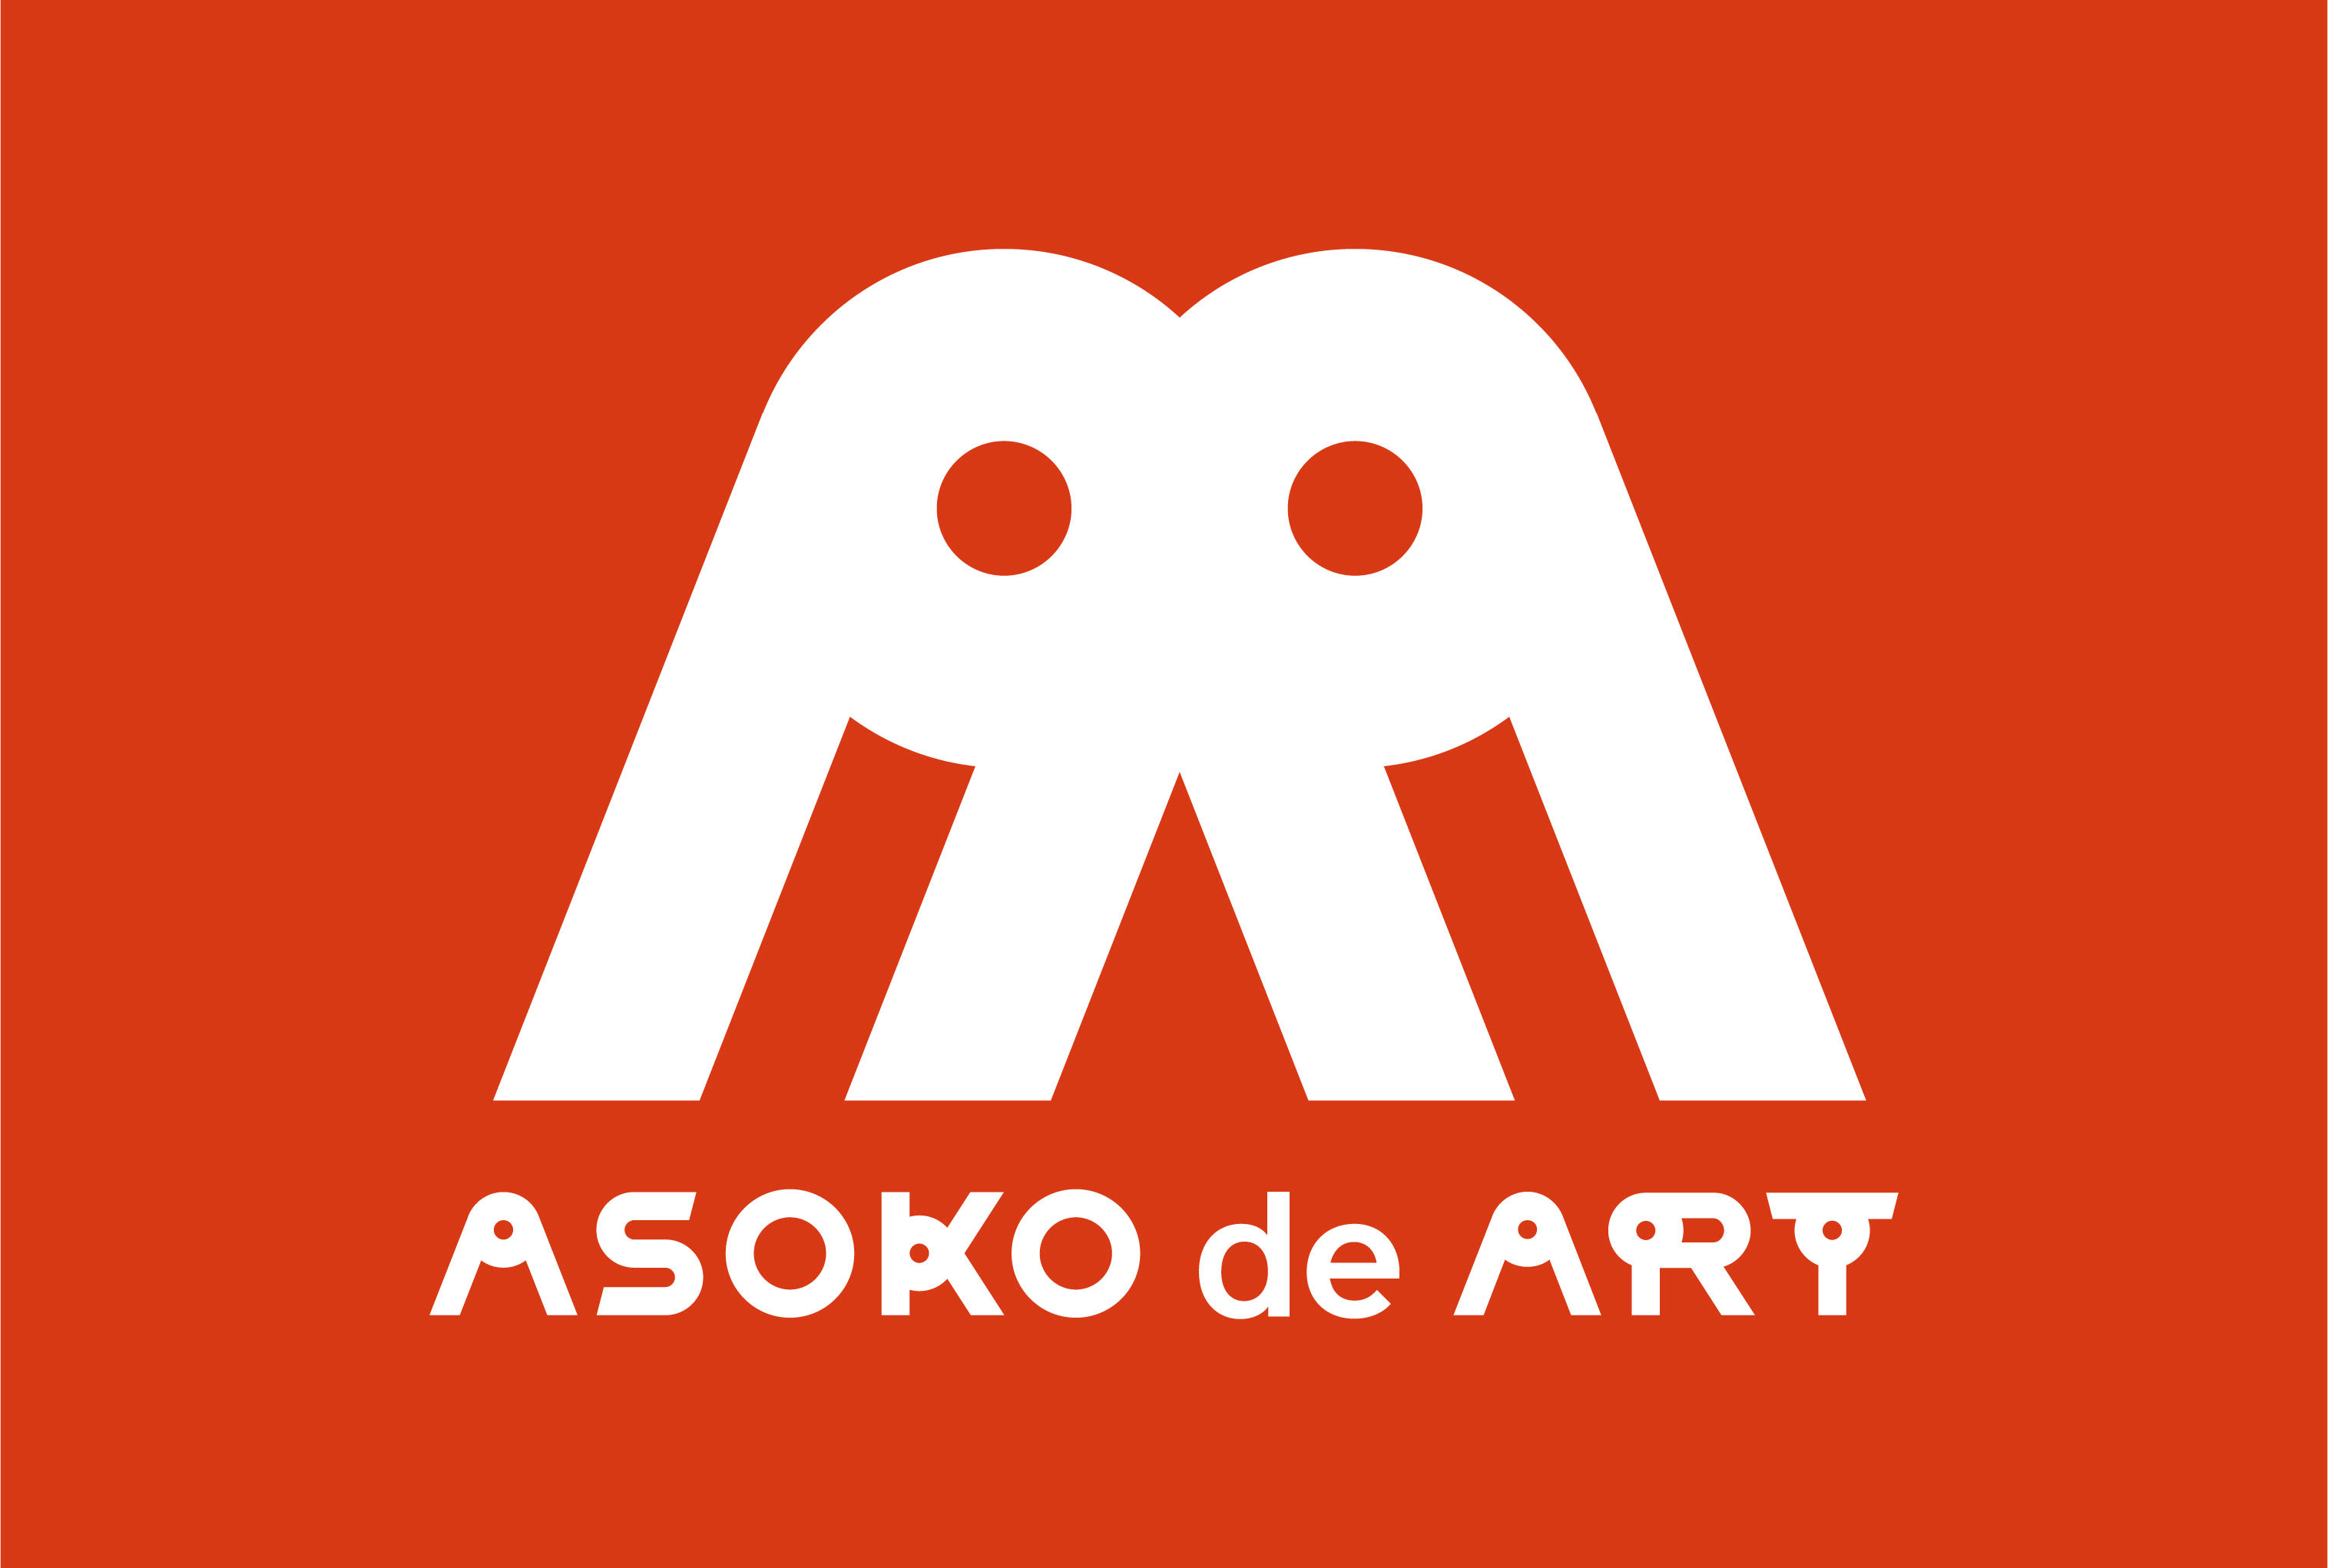 ASOKO ASOKO de ART